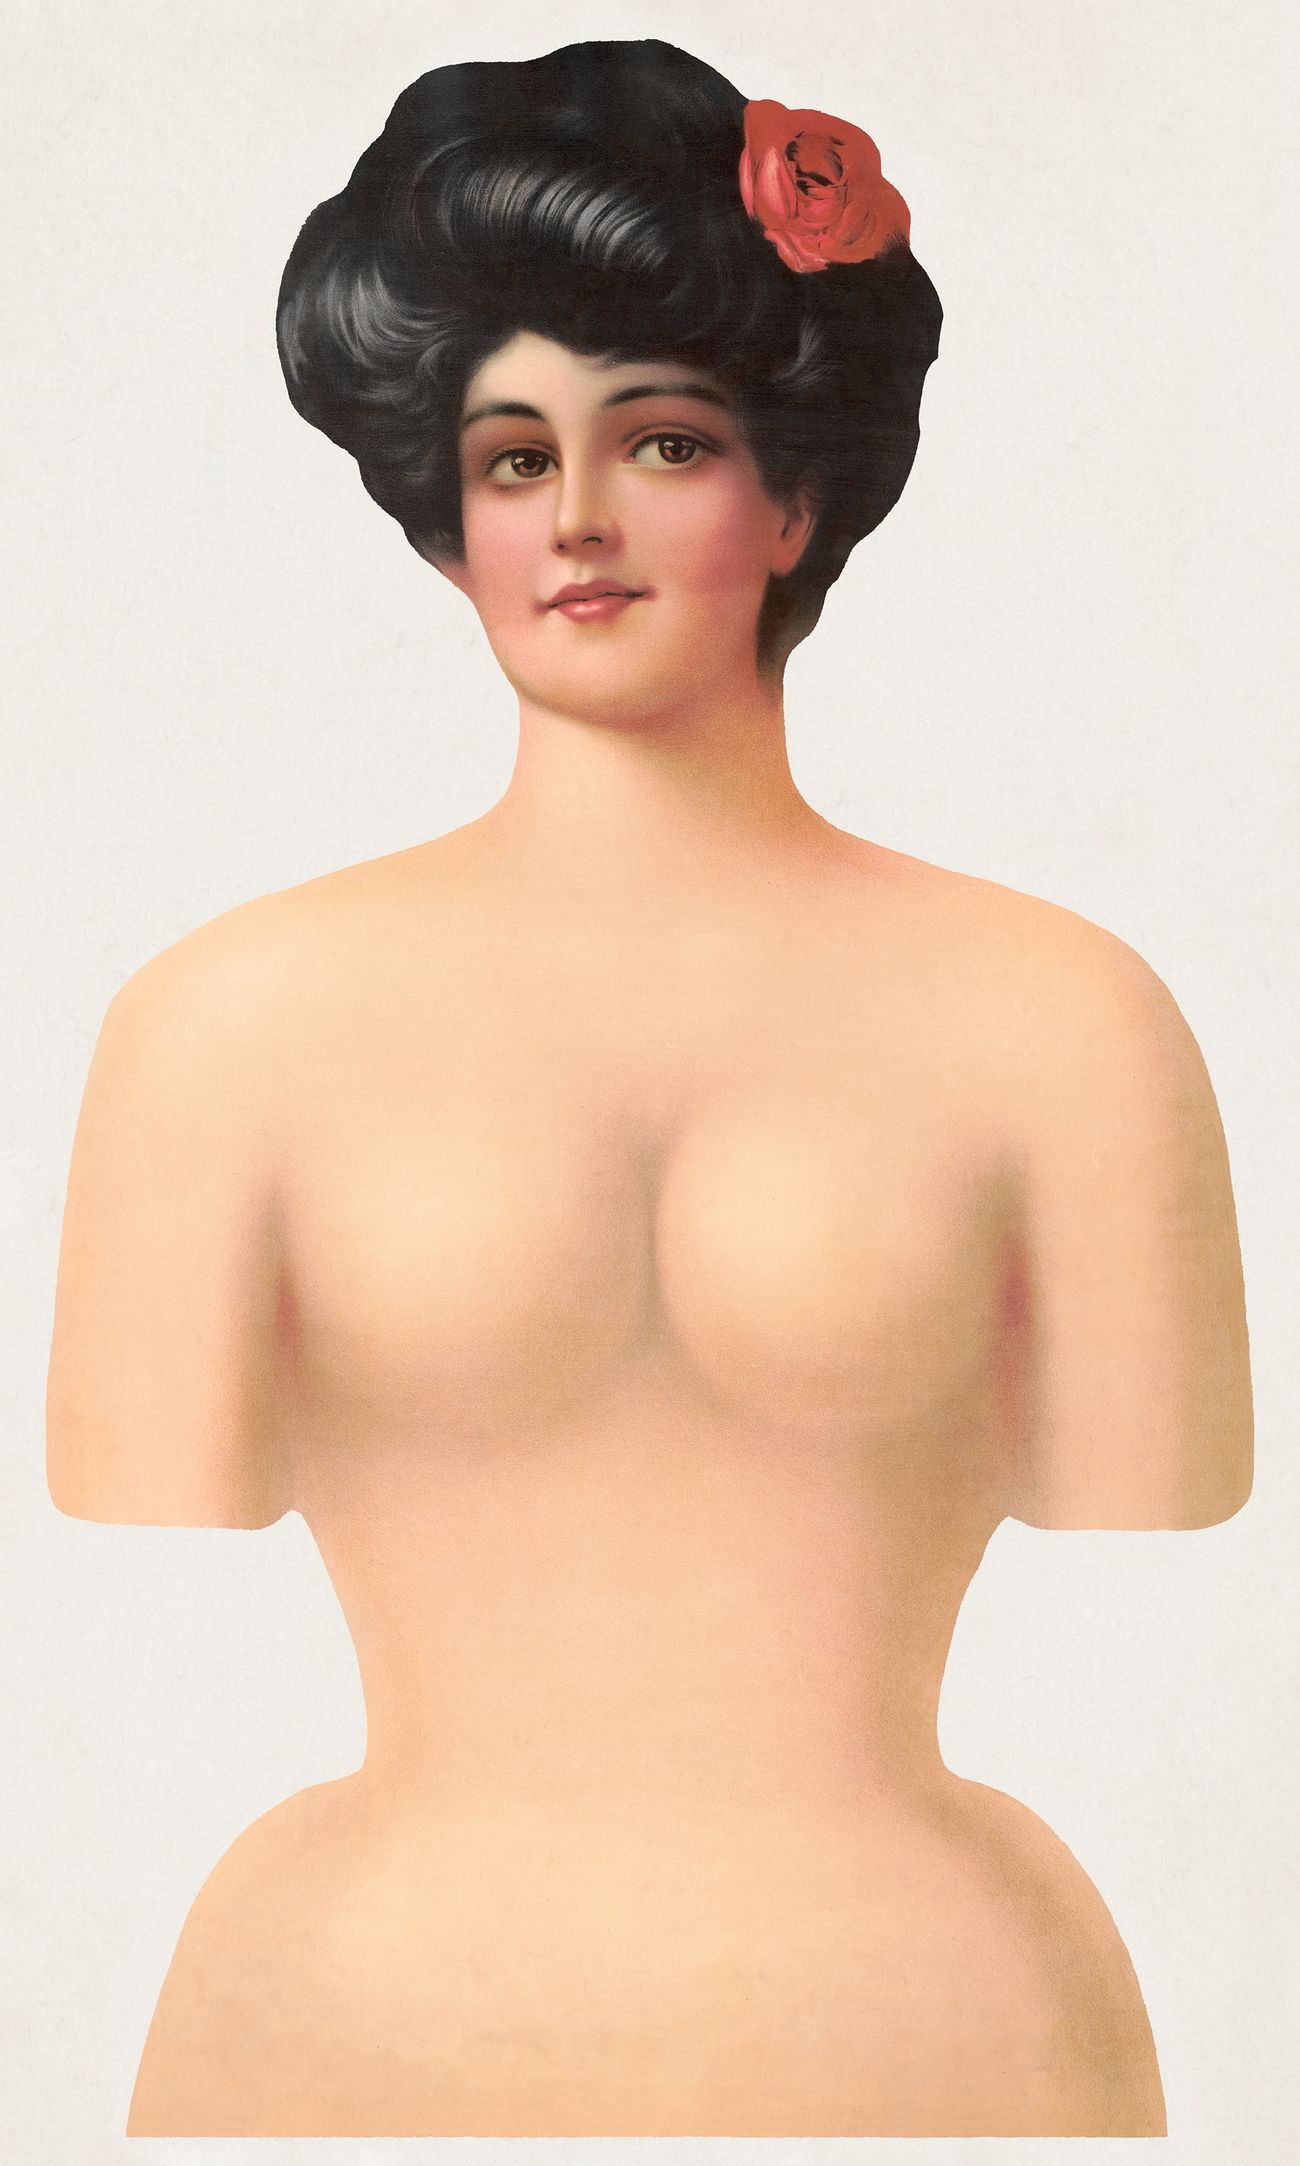 Olga (1906) Victorian woman's body